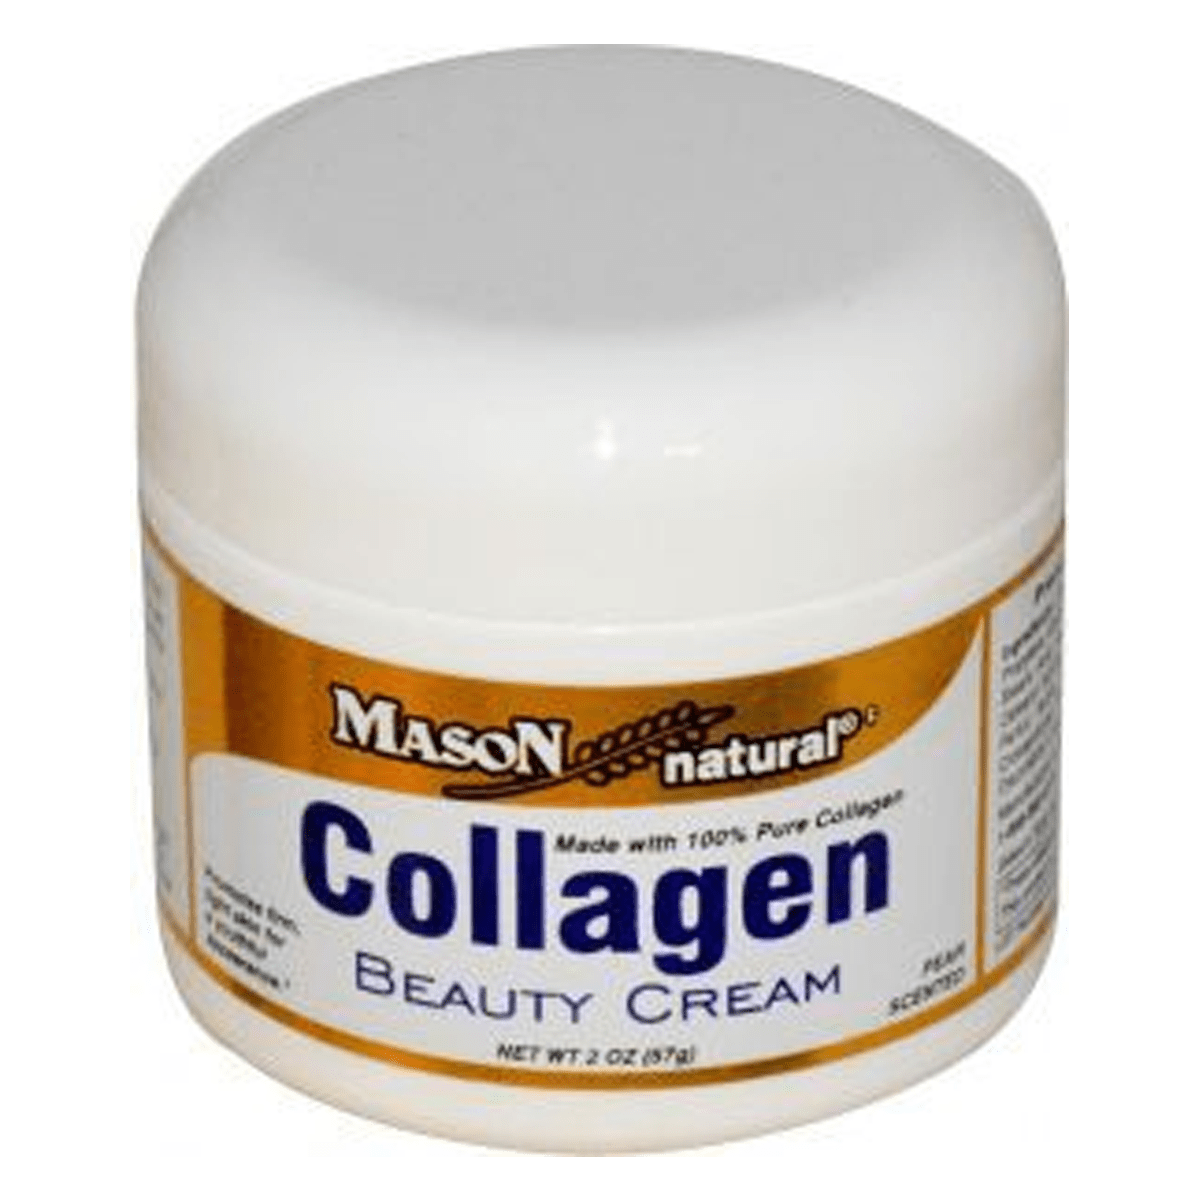 Mason Collagen Beauty Cream, 57g